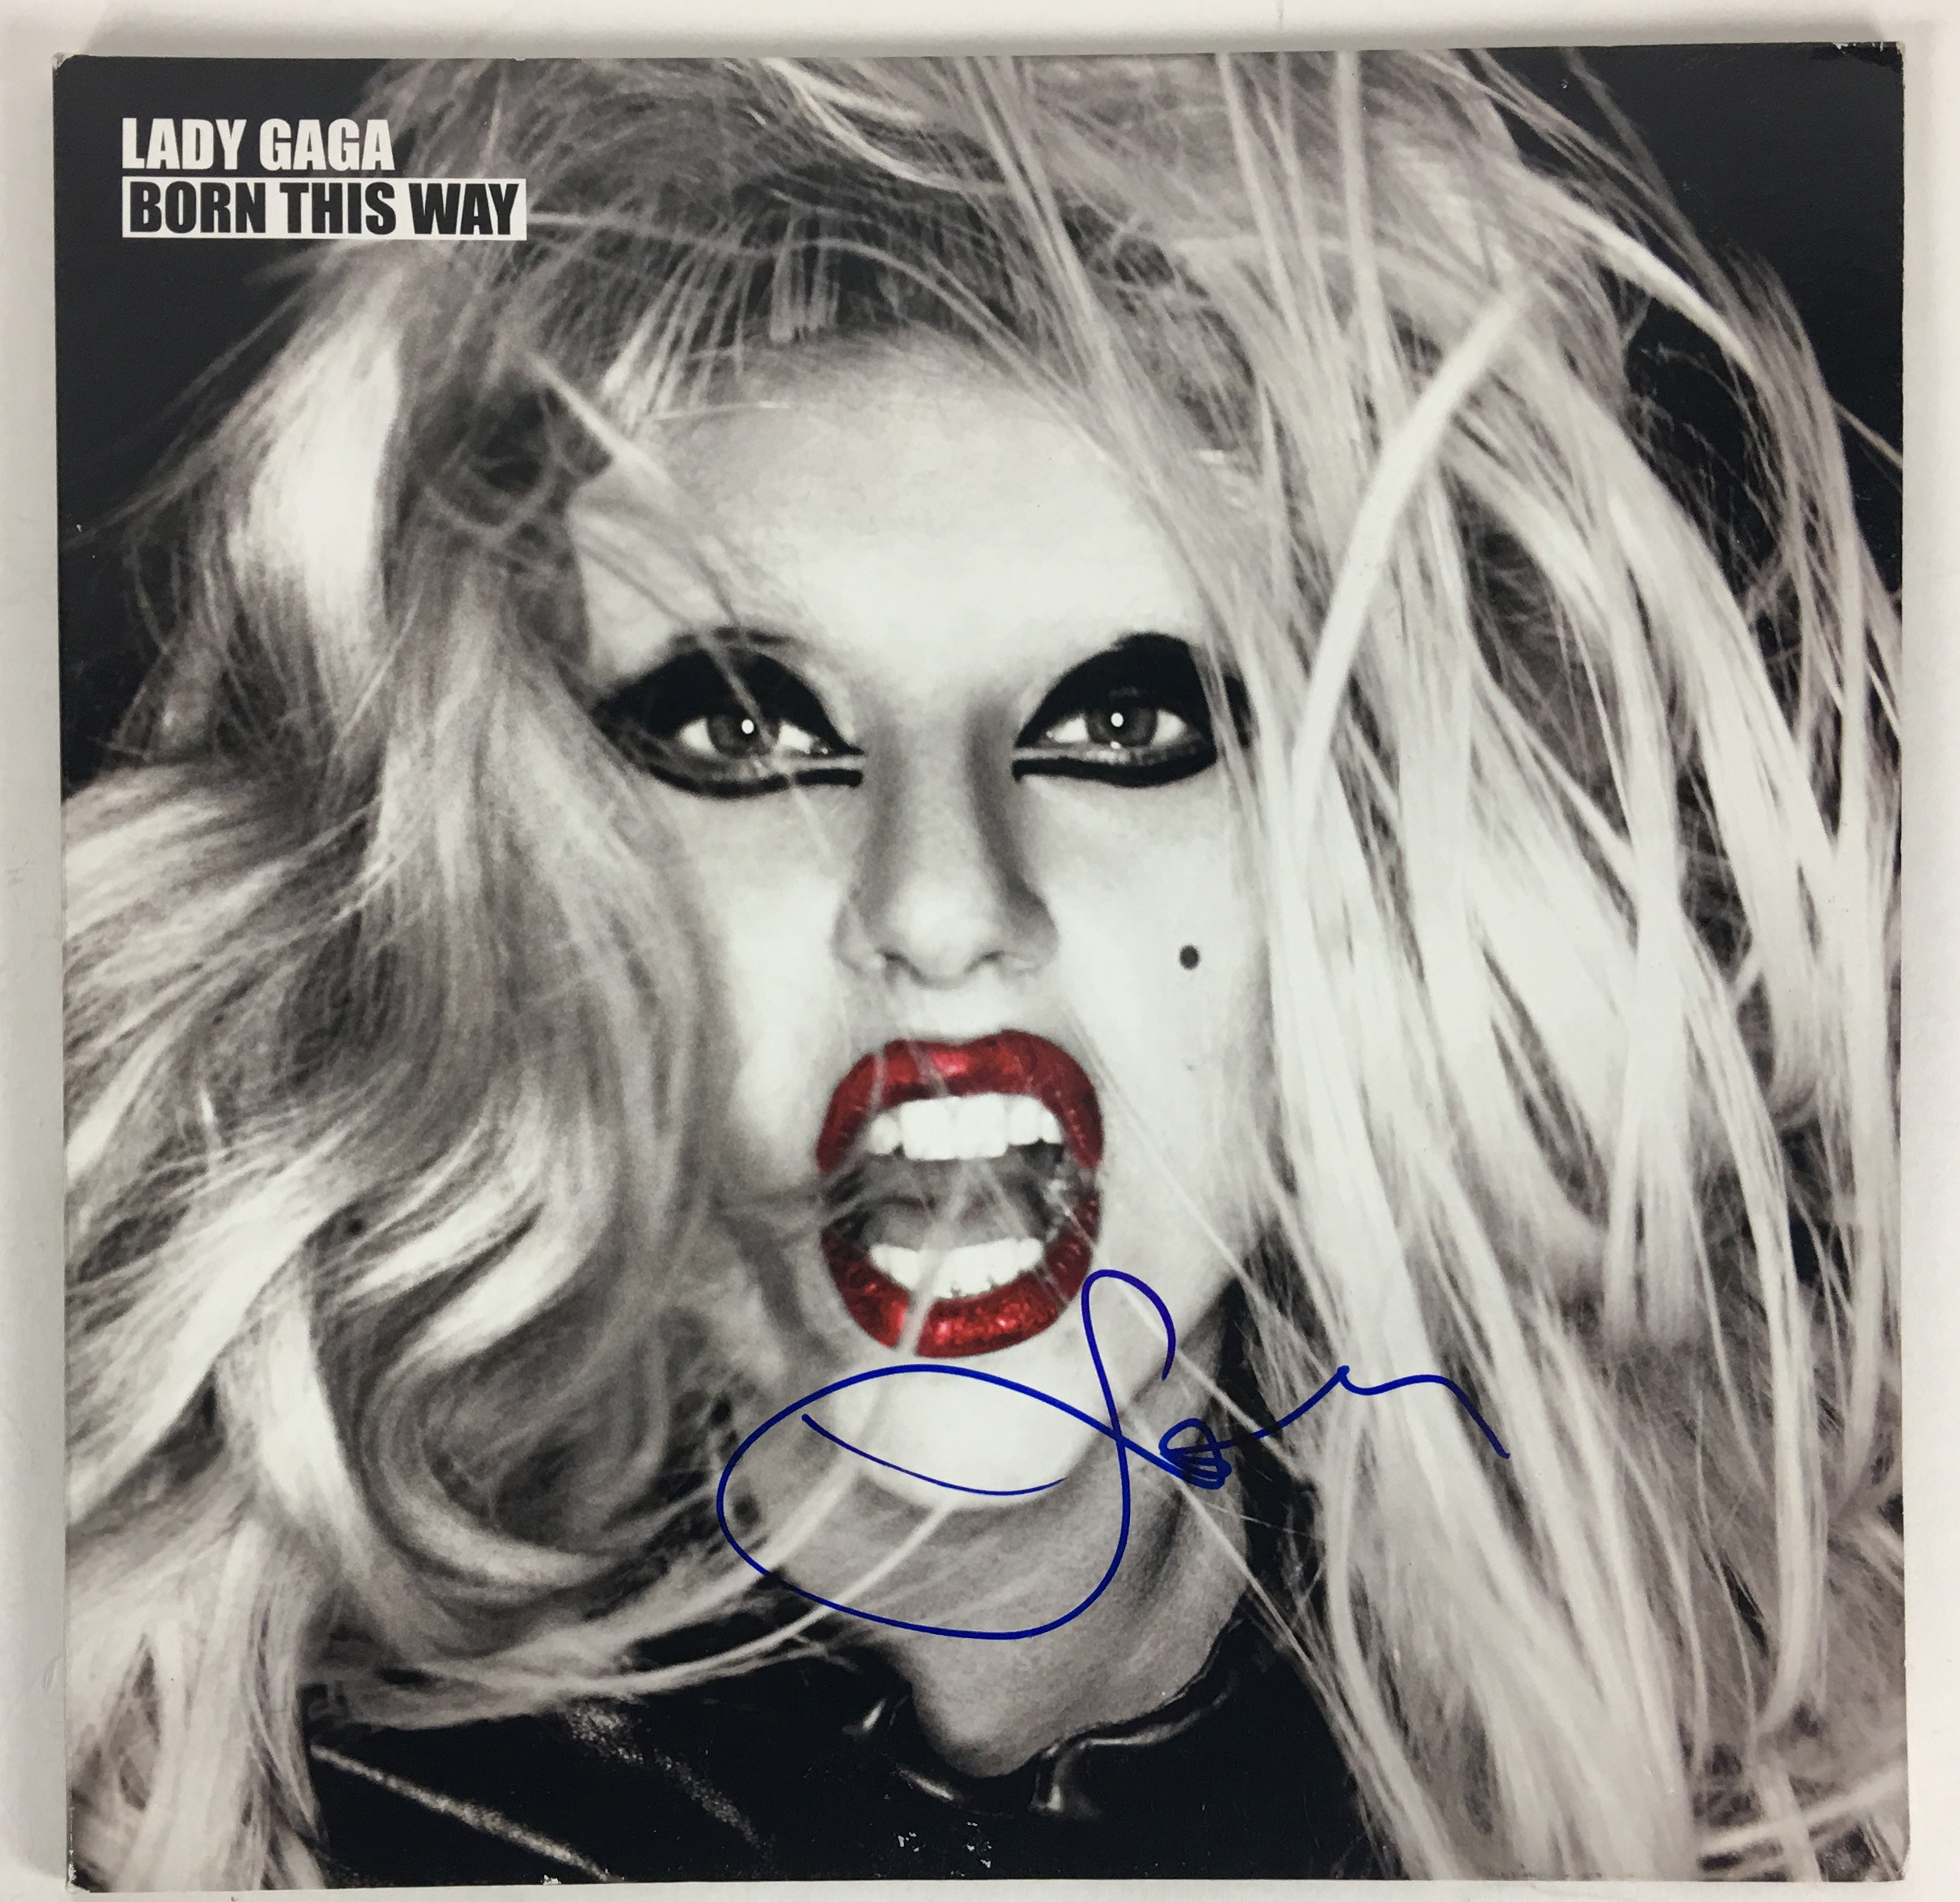 Gaga game песня. Леди Гага Борн ЗИС Вей. Judas Lady Gaga обложка. Scheiße леди Гага.